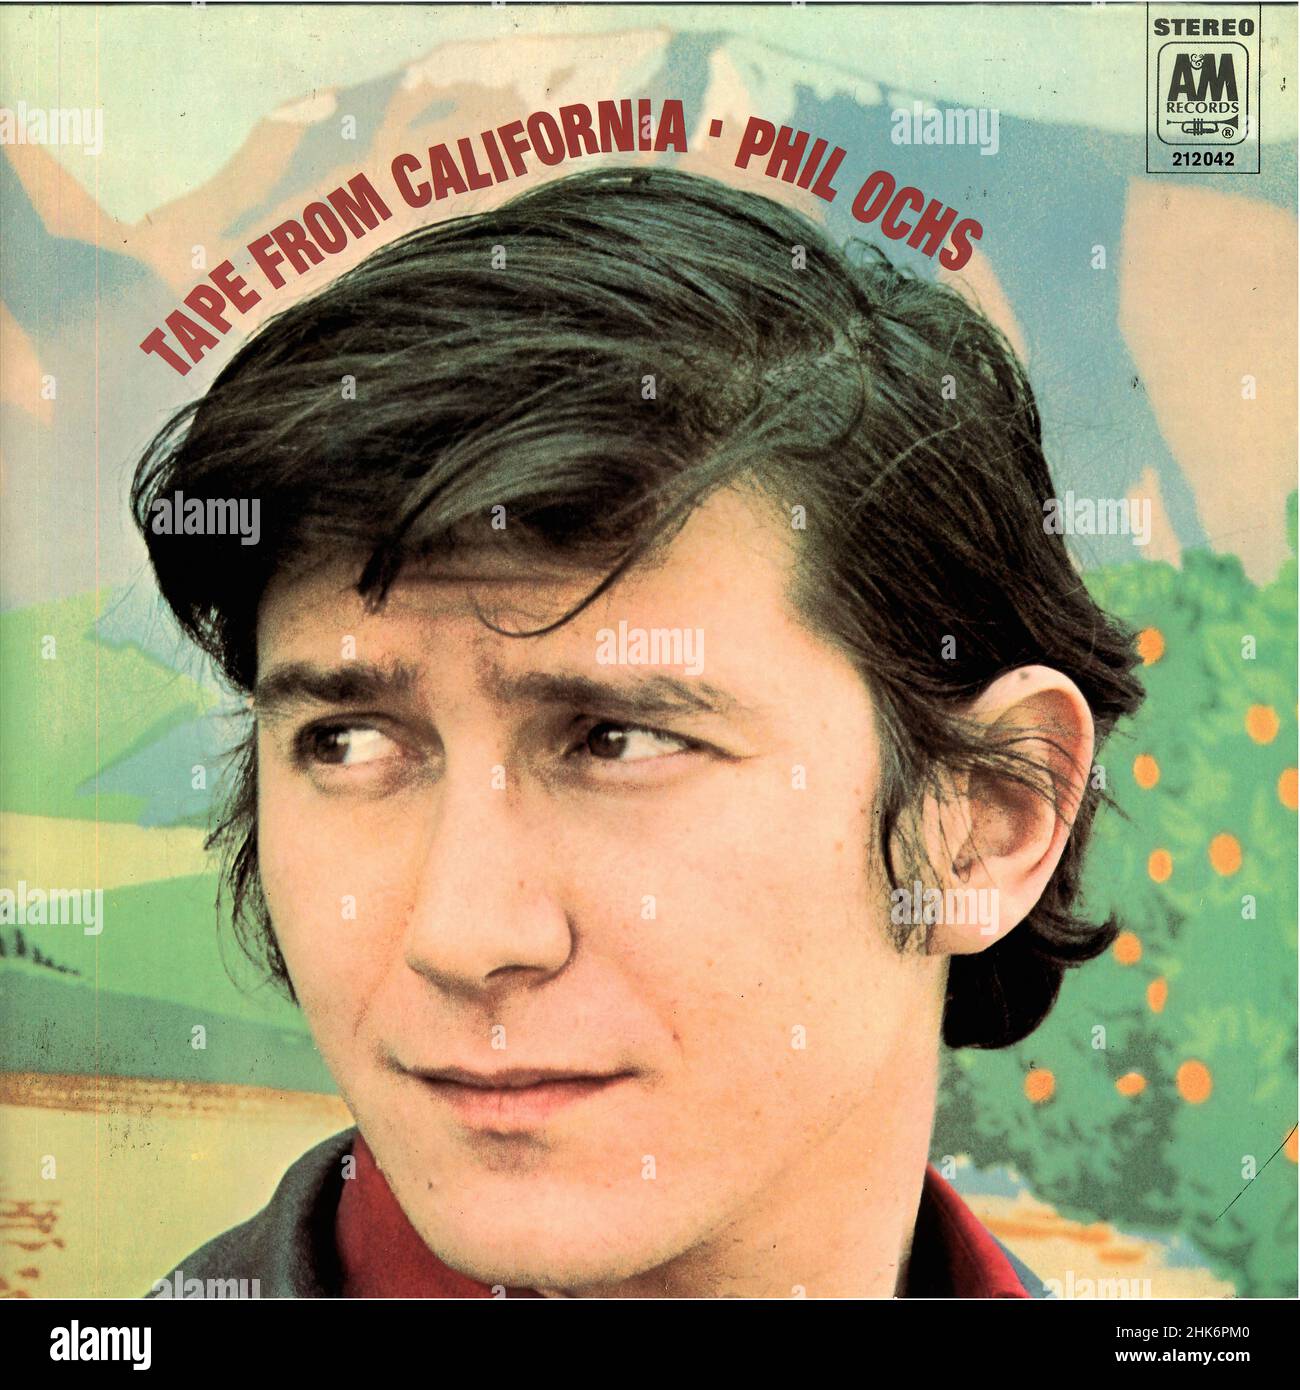 Vintage vinyl record cover - 1968 - Ochs, Phil - Tape From California - D Stock Photo